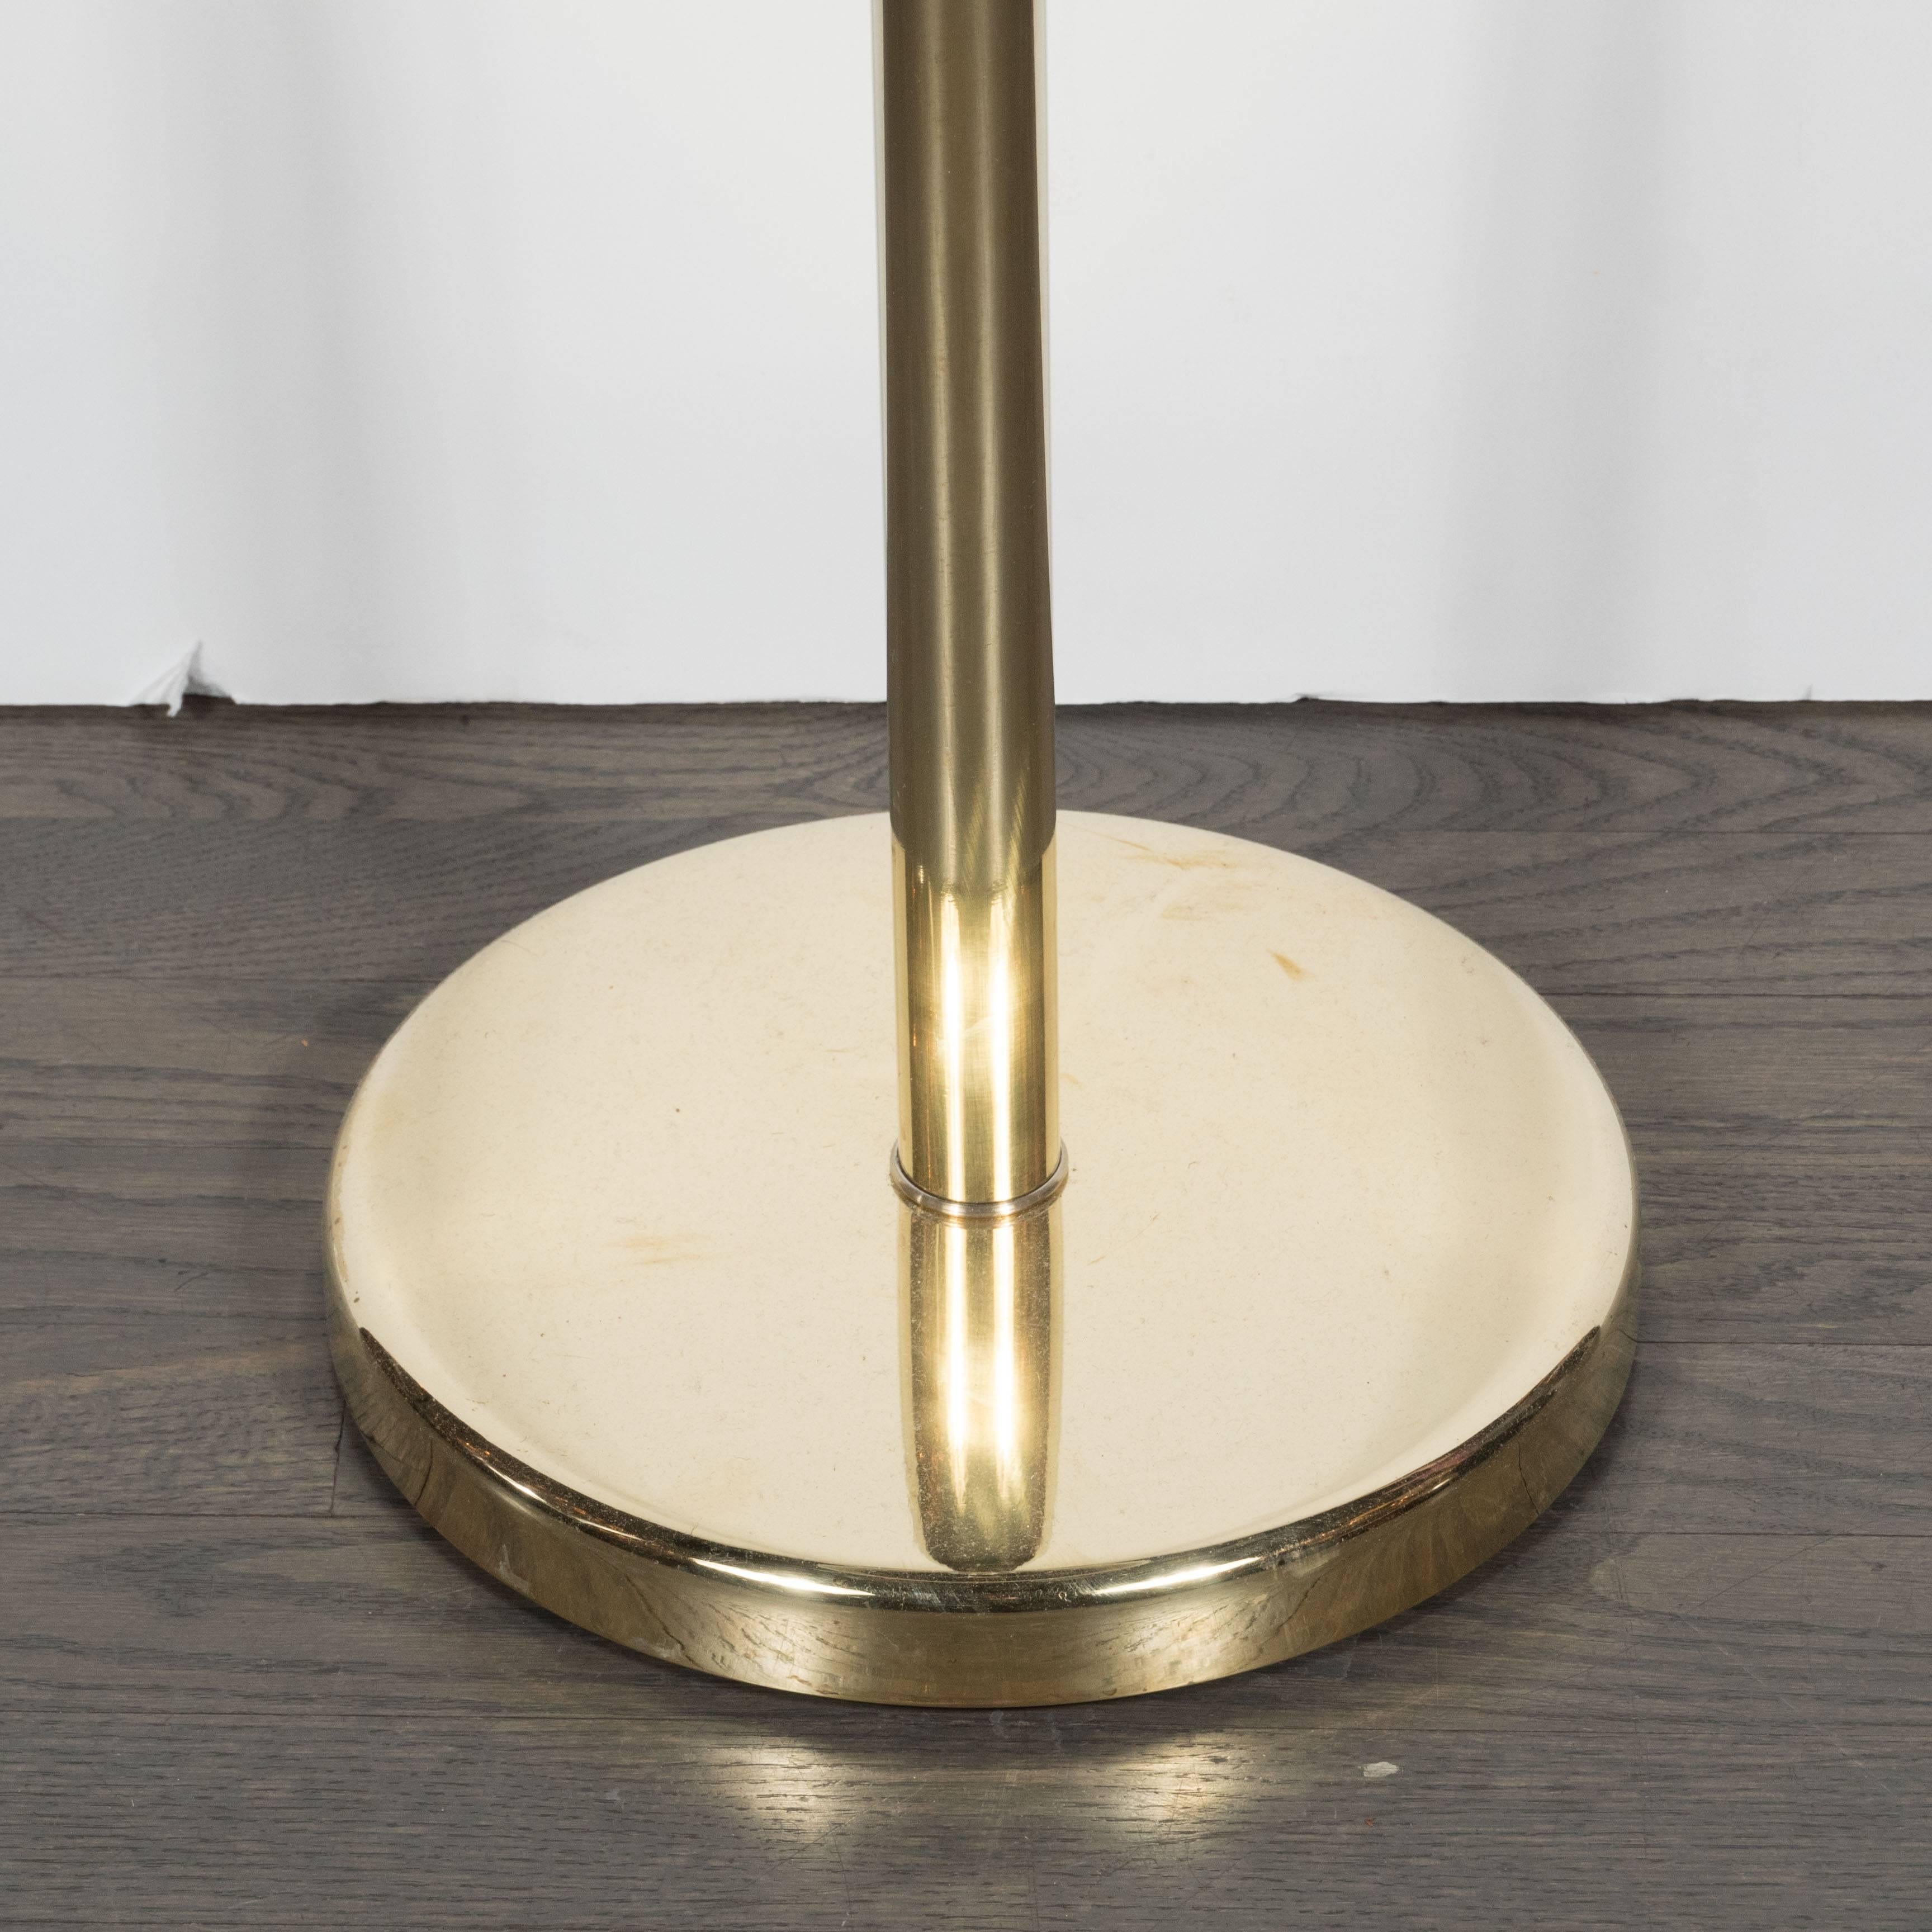 American Glamorous Mid-Century Modern Floor Lamp in Handblown Murano Glass and Brass